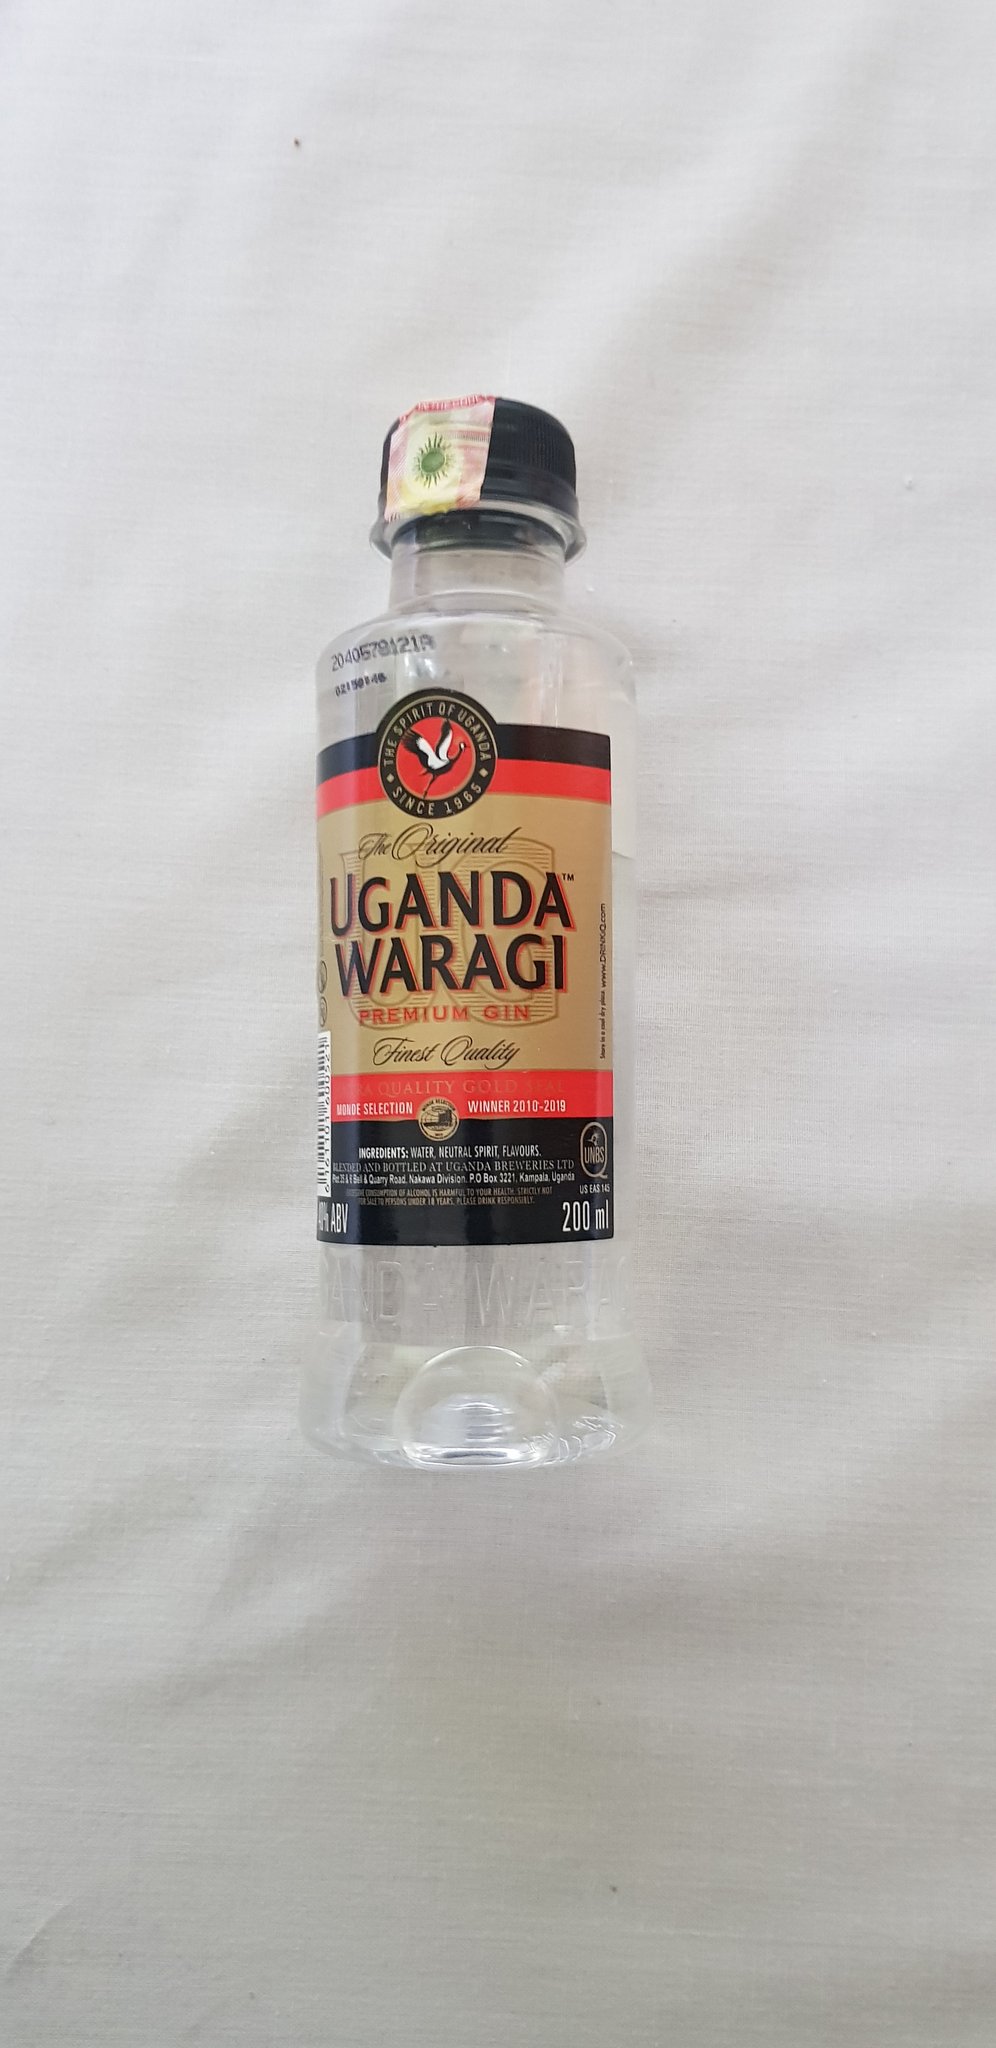 National drink of Uganda - Waragi